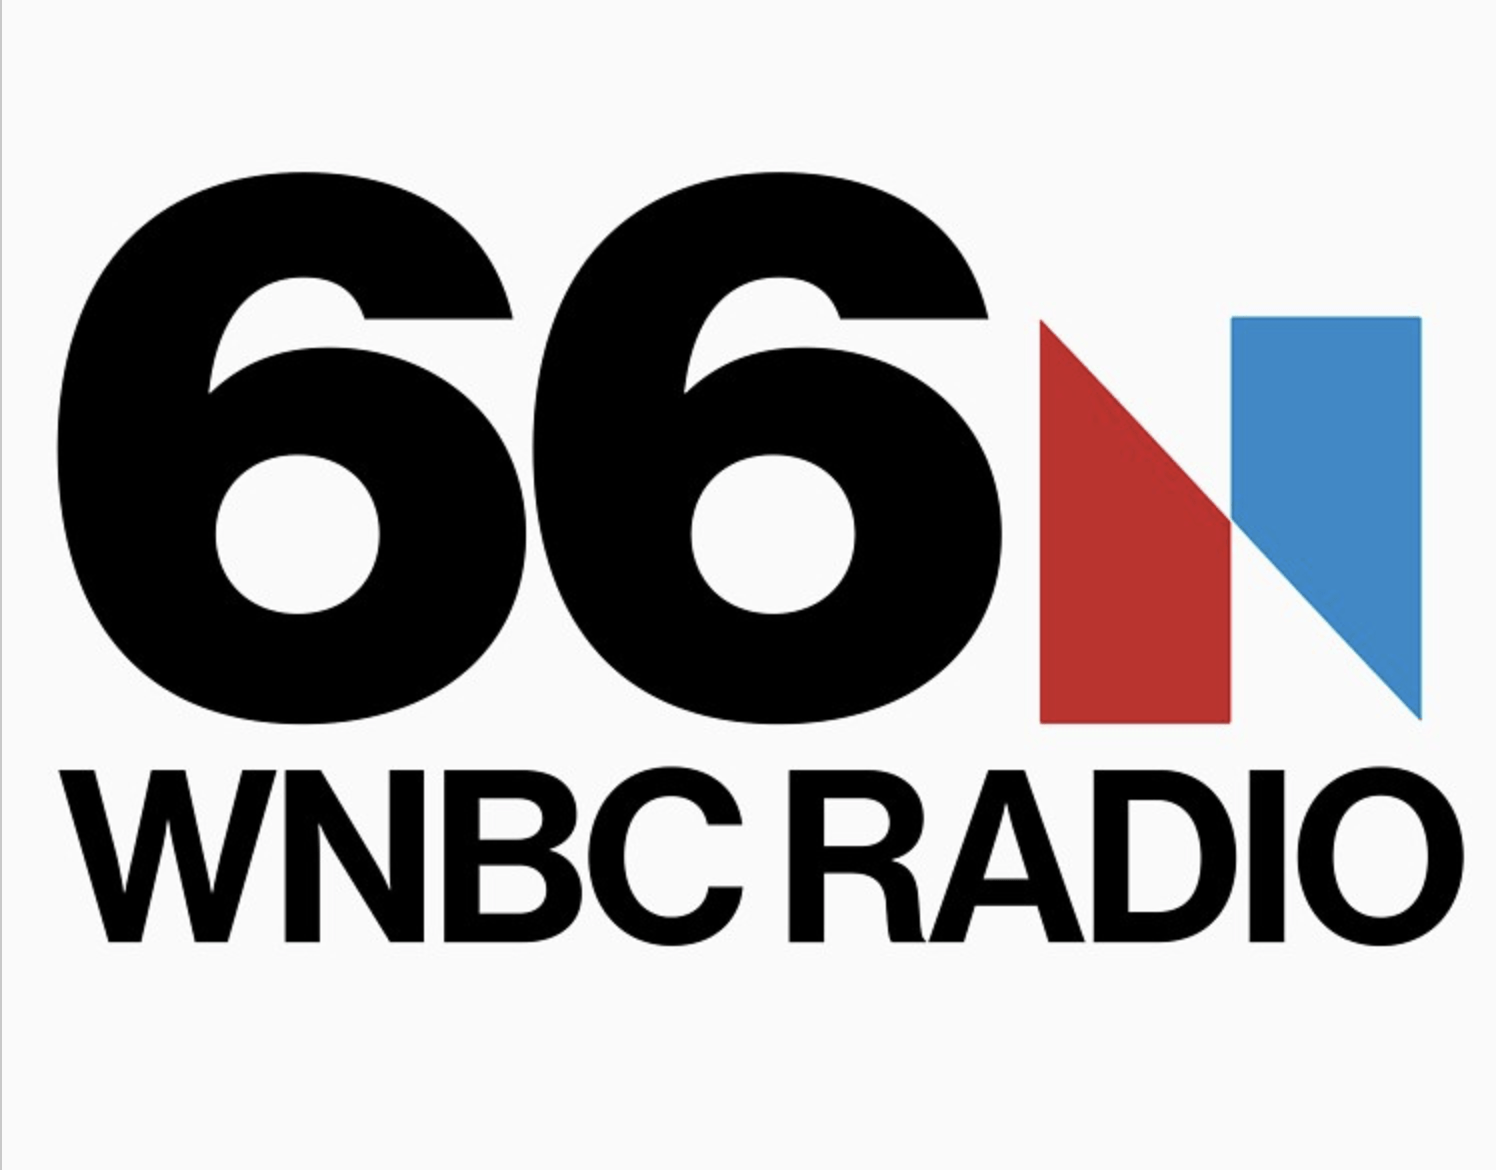 wnbc logo 1980 2